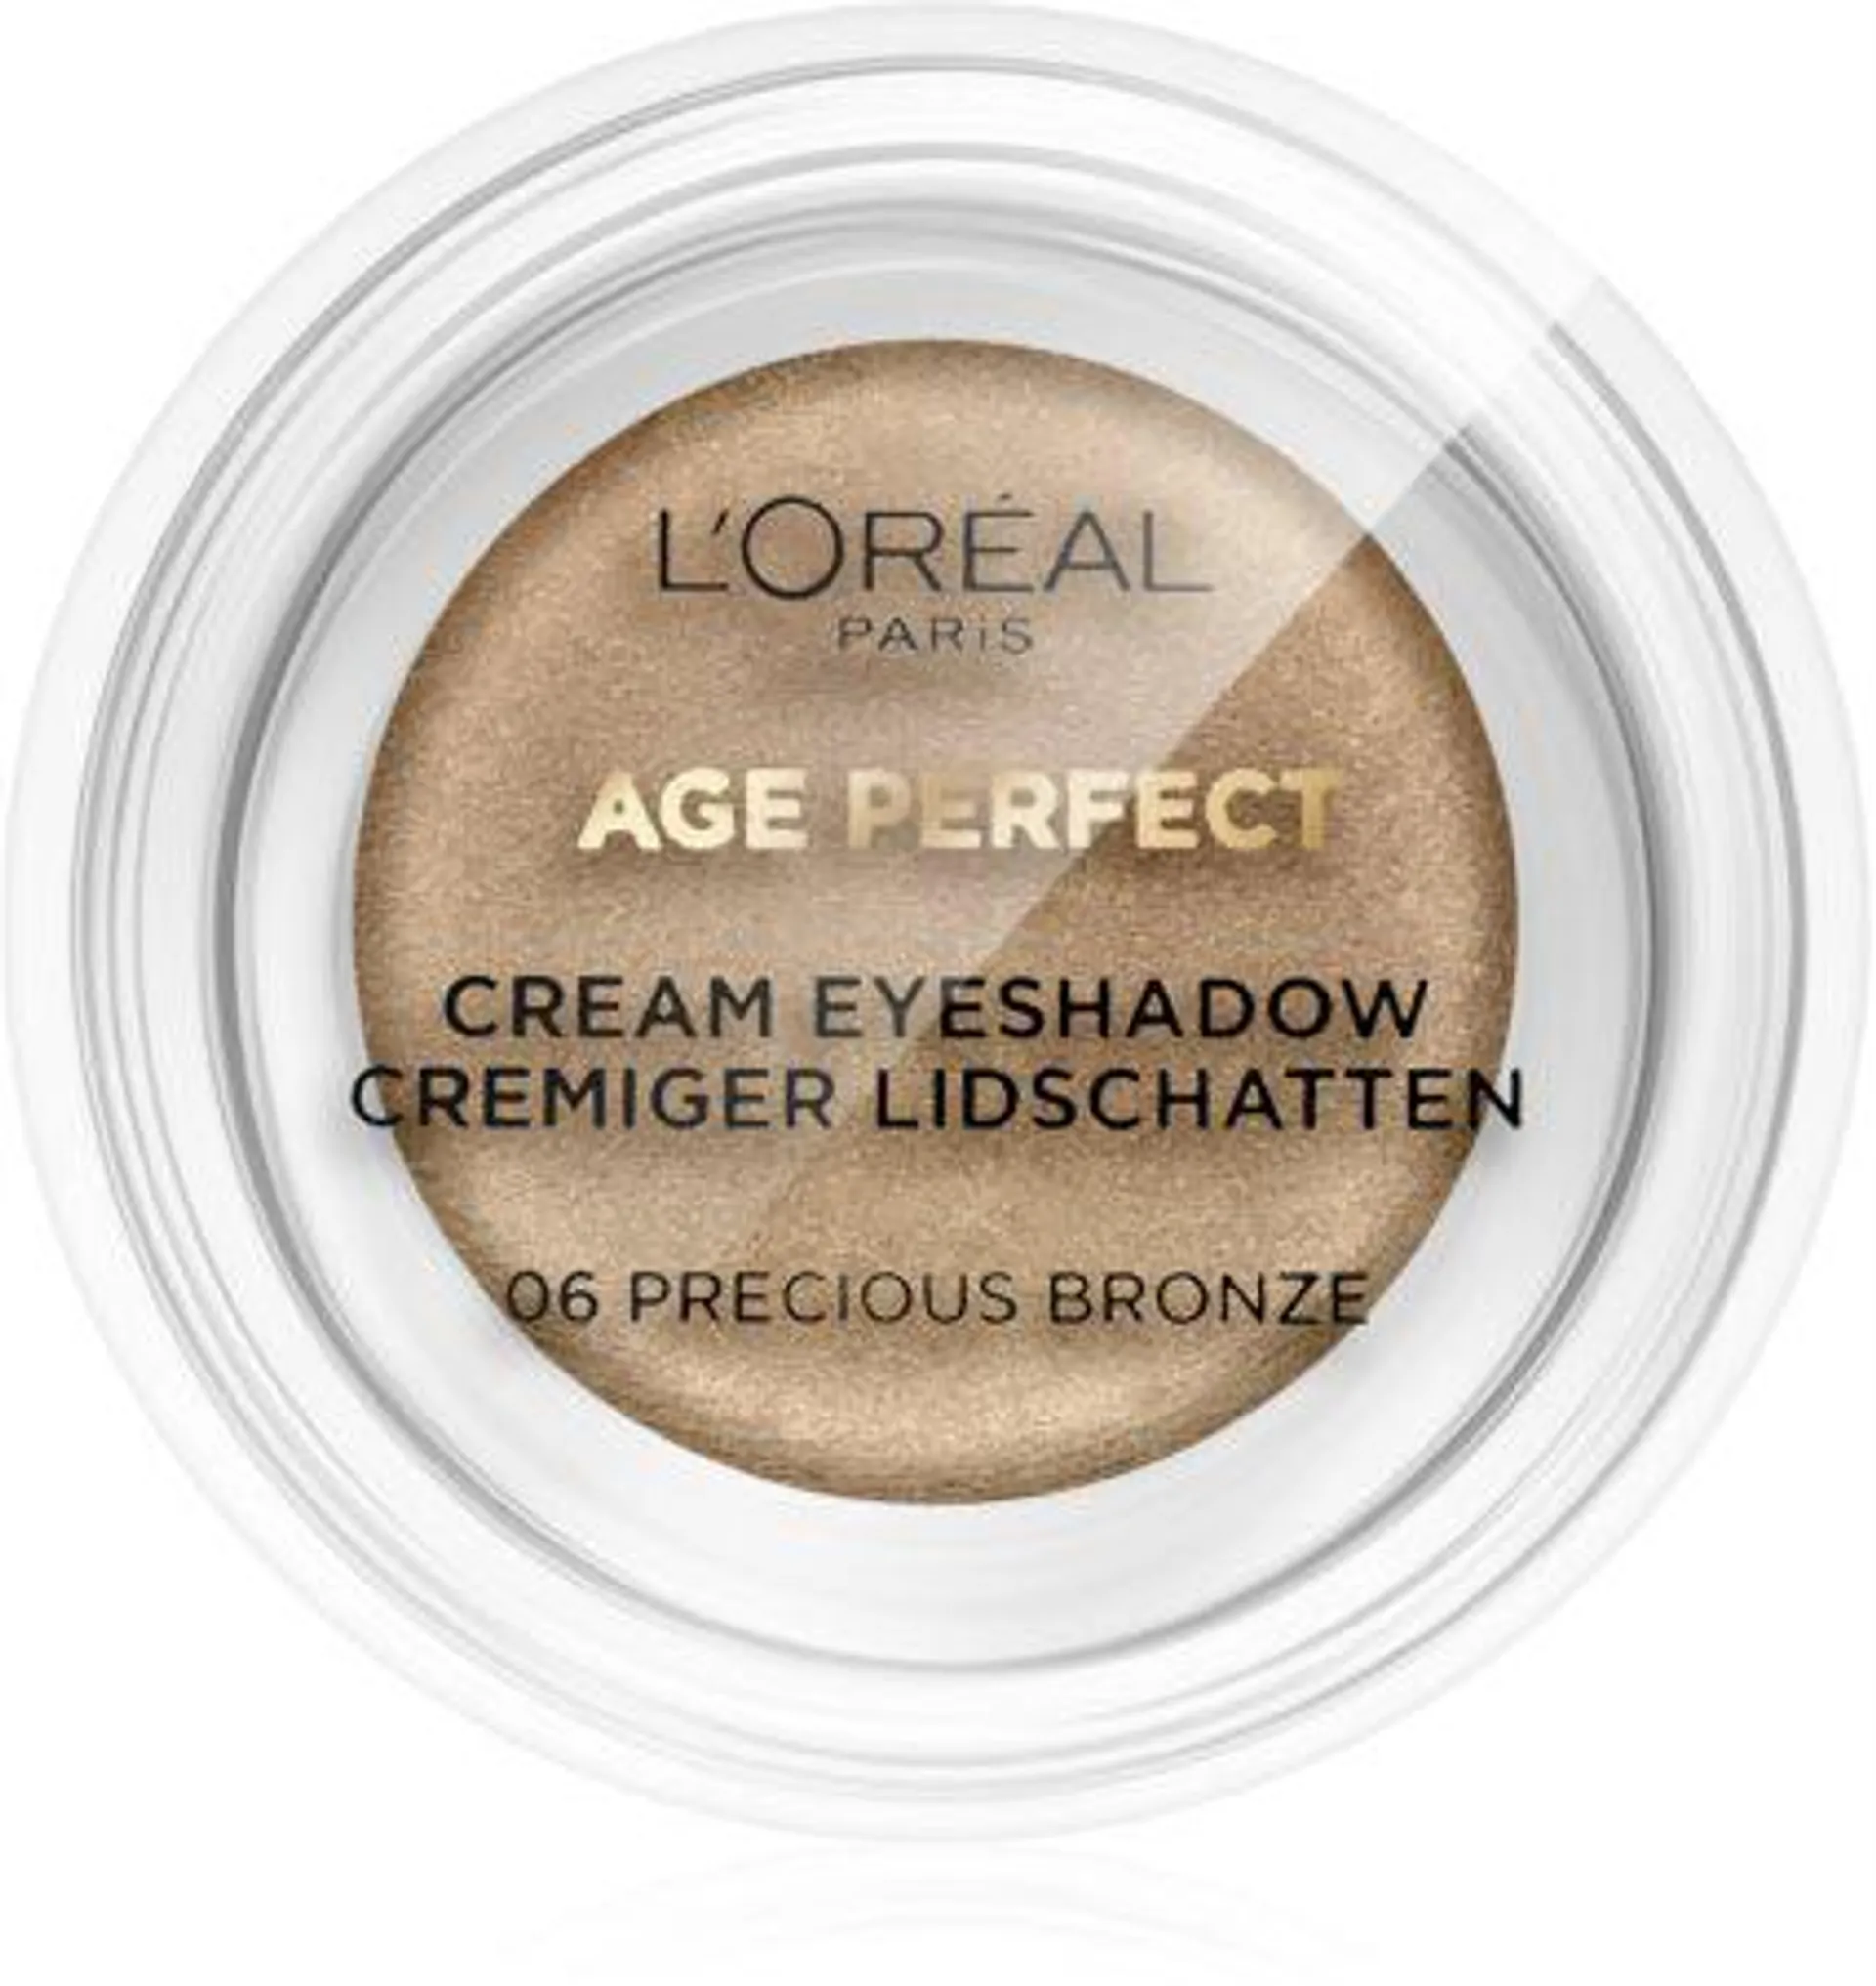 Age Perfect Cream Eyeshadow